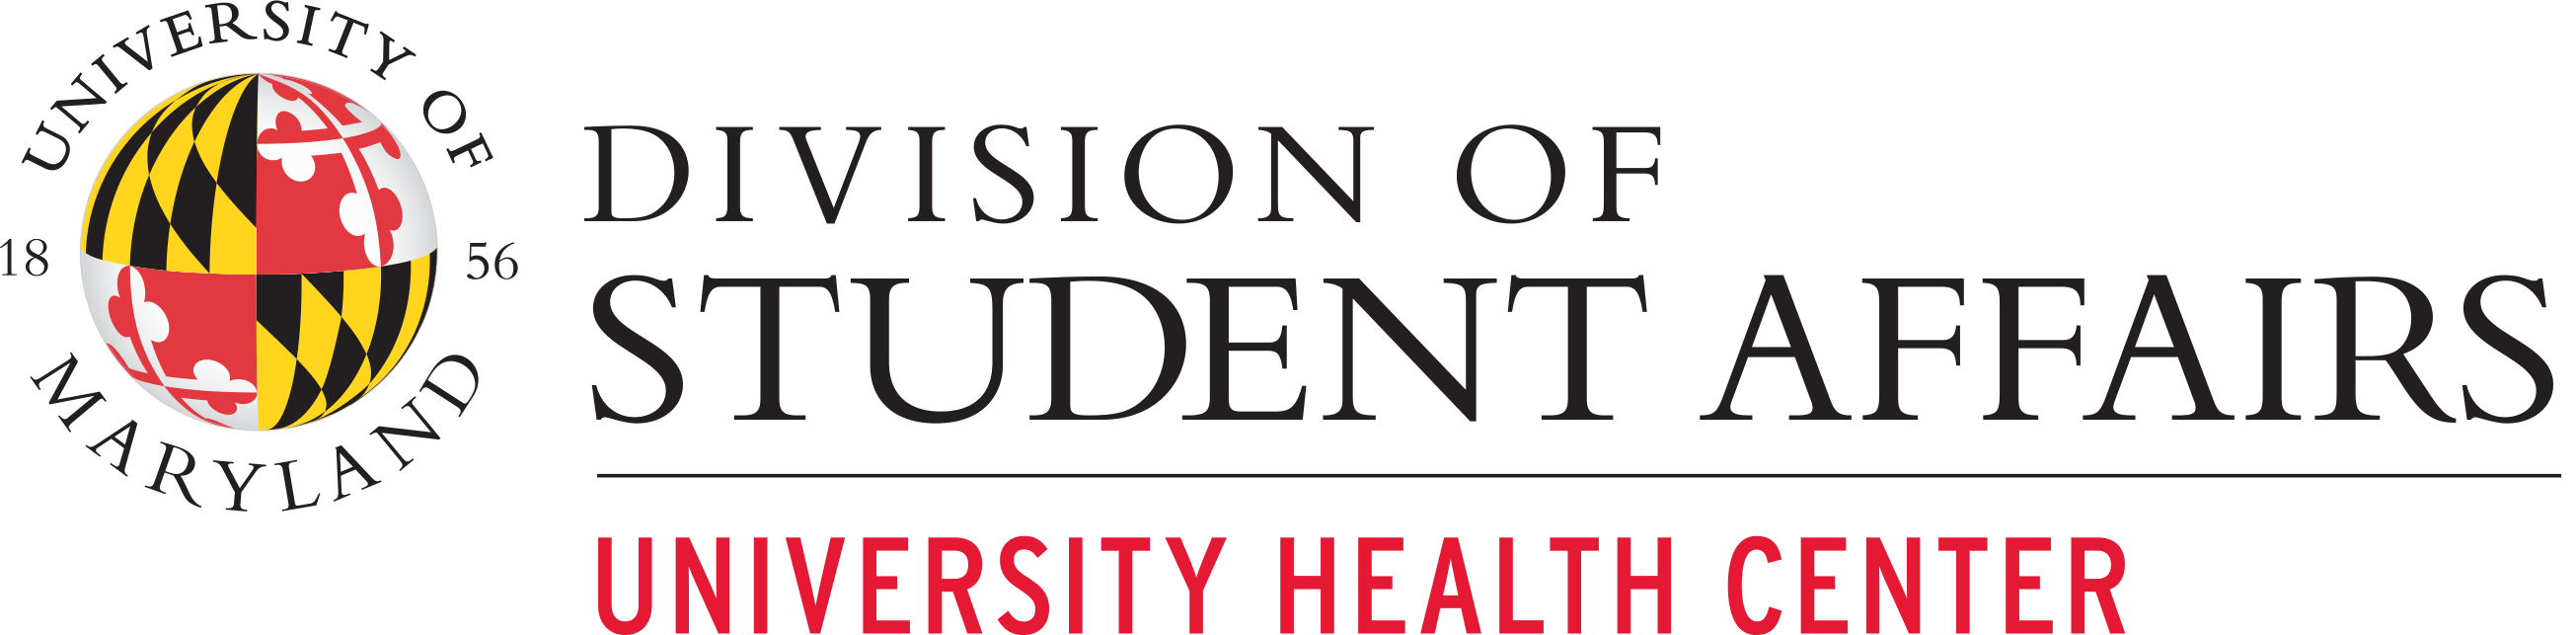 University Health Center logo